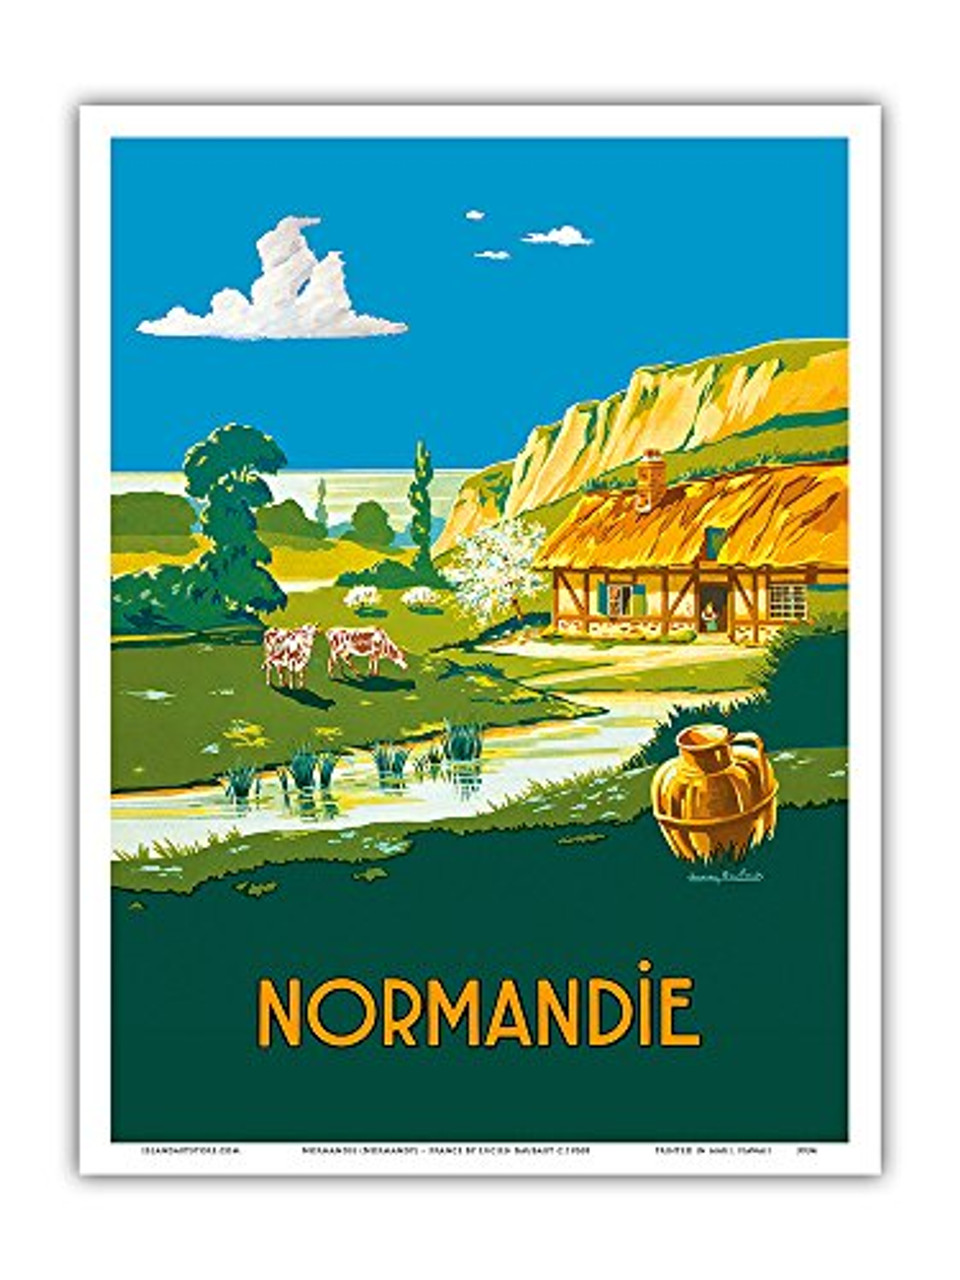 Pacifica Island Art Normandie (Normandy) France - L'été, L'été (Summer,  Summer) - French State Railways - Vintage Railroad Travel Poster by Lucien  Baubaut c.1930s - Master Art Print - 9in x 12in - Warehousesoverstock